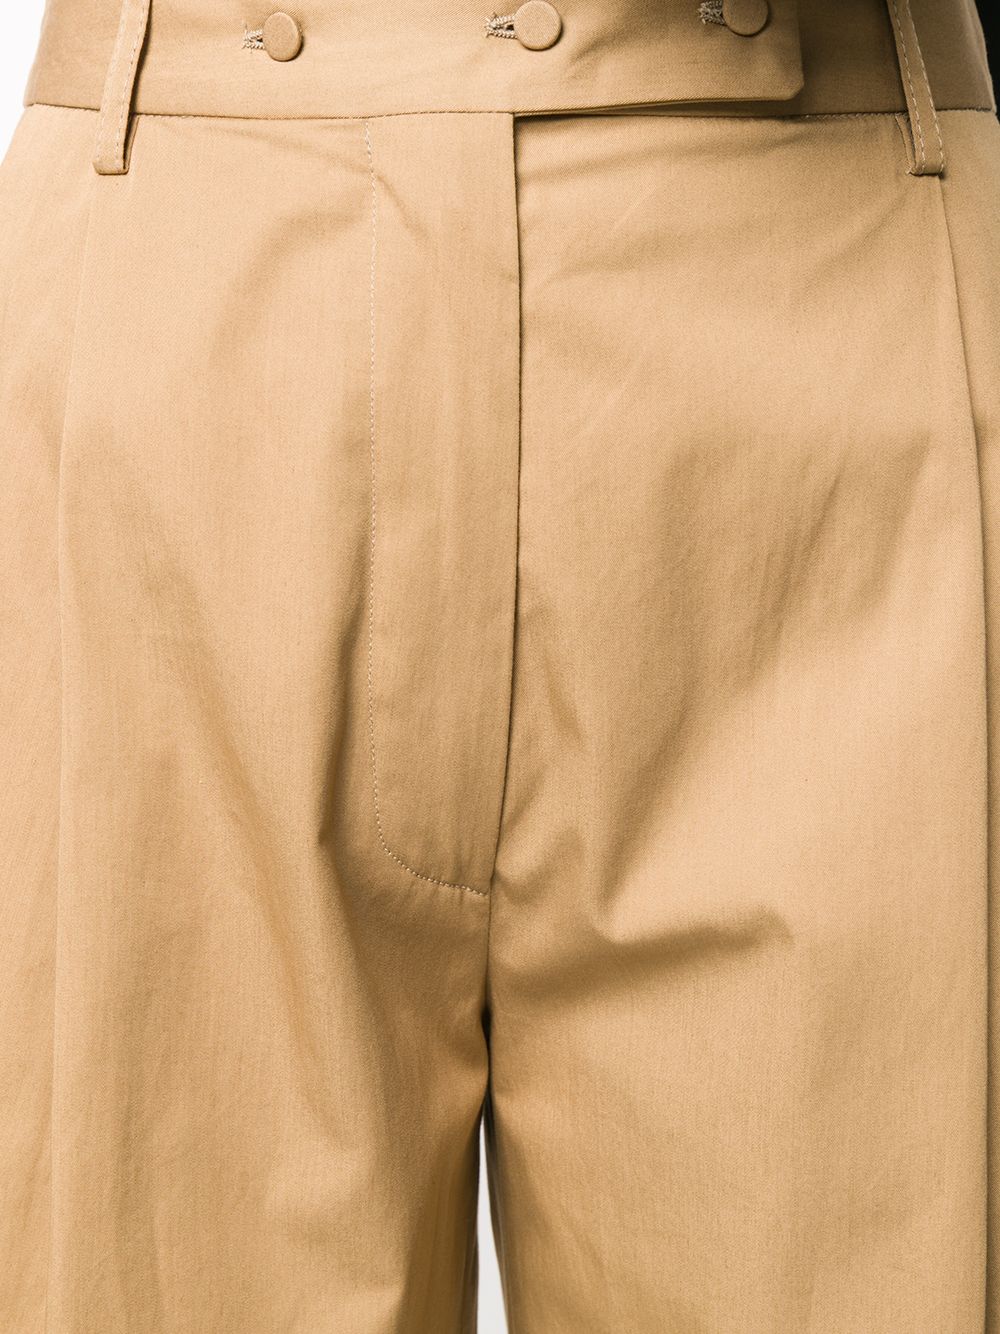 фото Maison flaneur брюки с подворотами